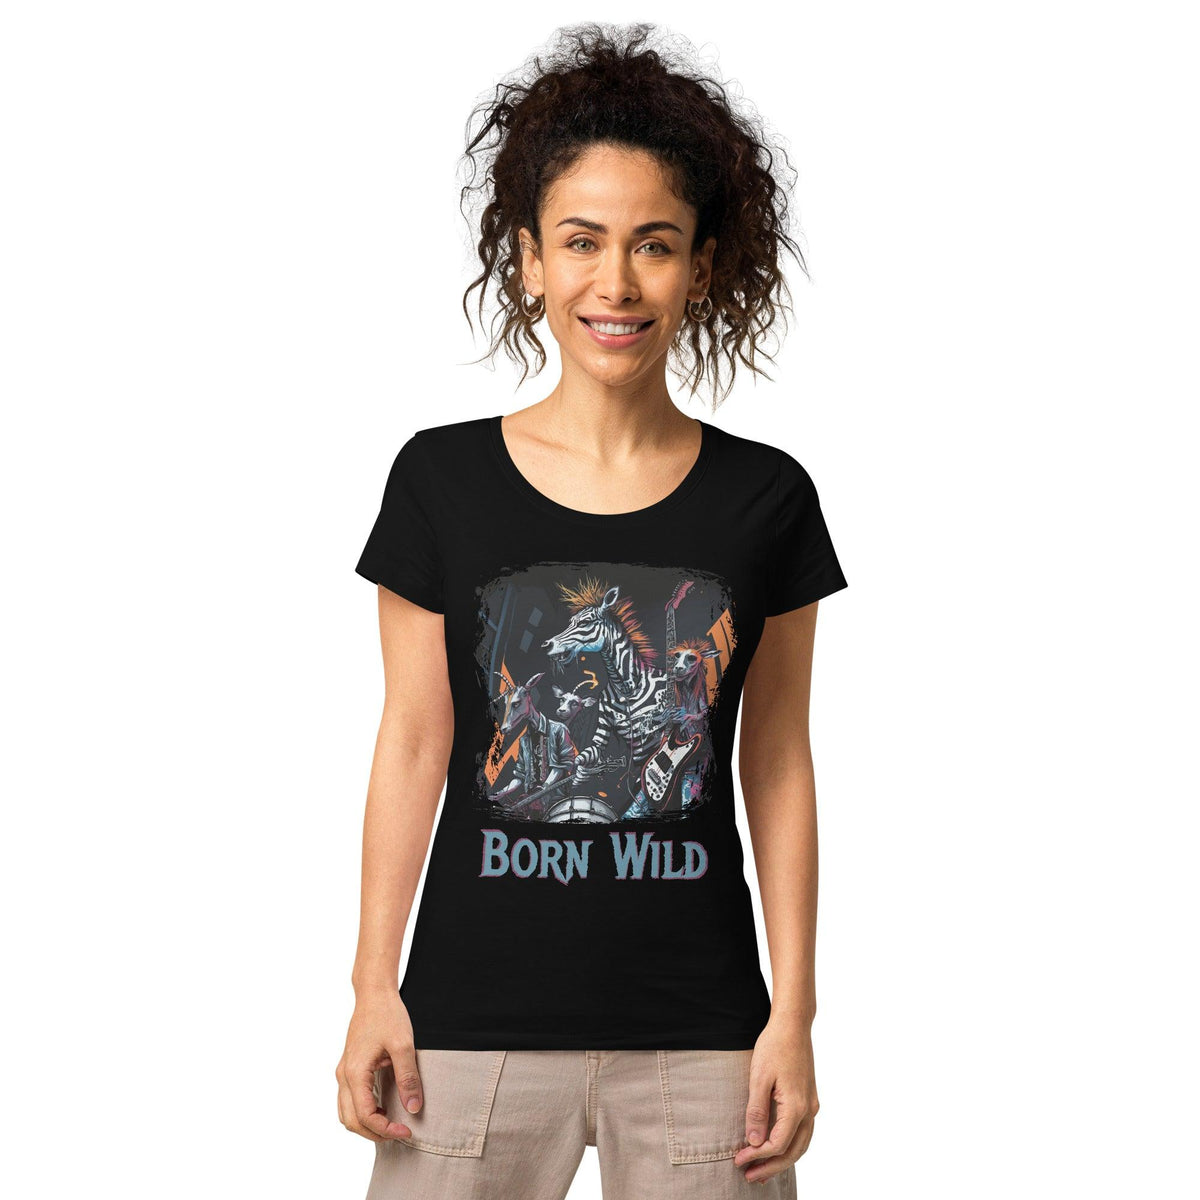 Born wild women’s basic organic t-shirt - Beyond T-shirts